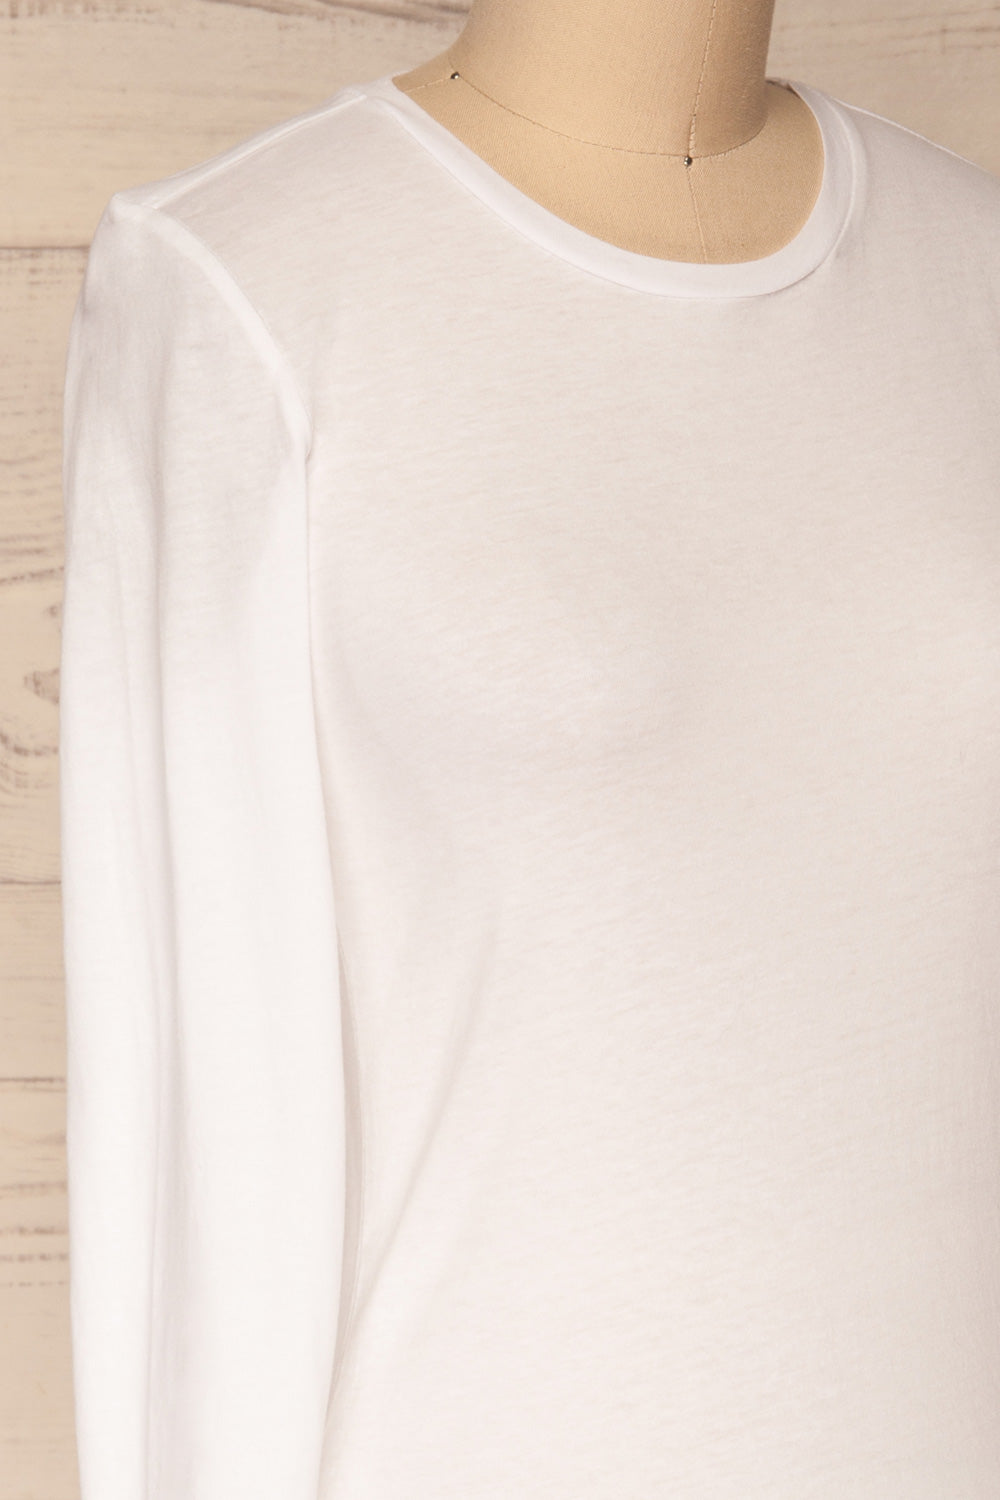 Otwock White Long Sleeved Top | La Petite Garçonne side close-up